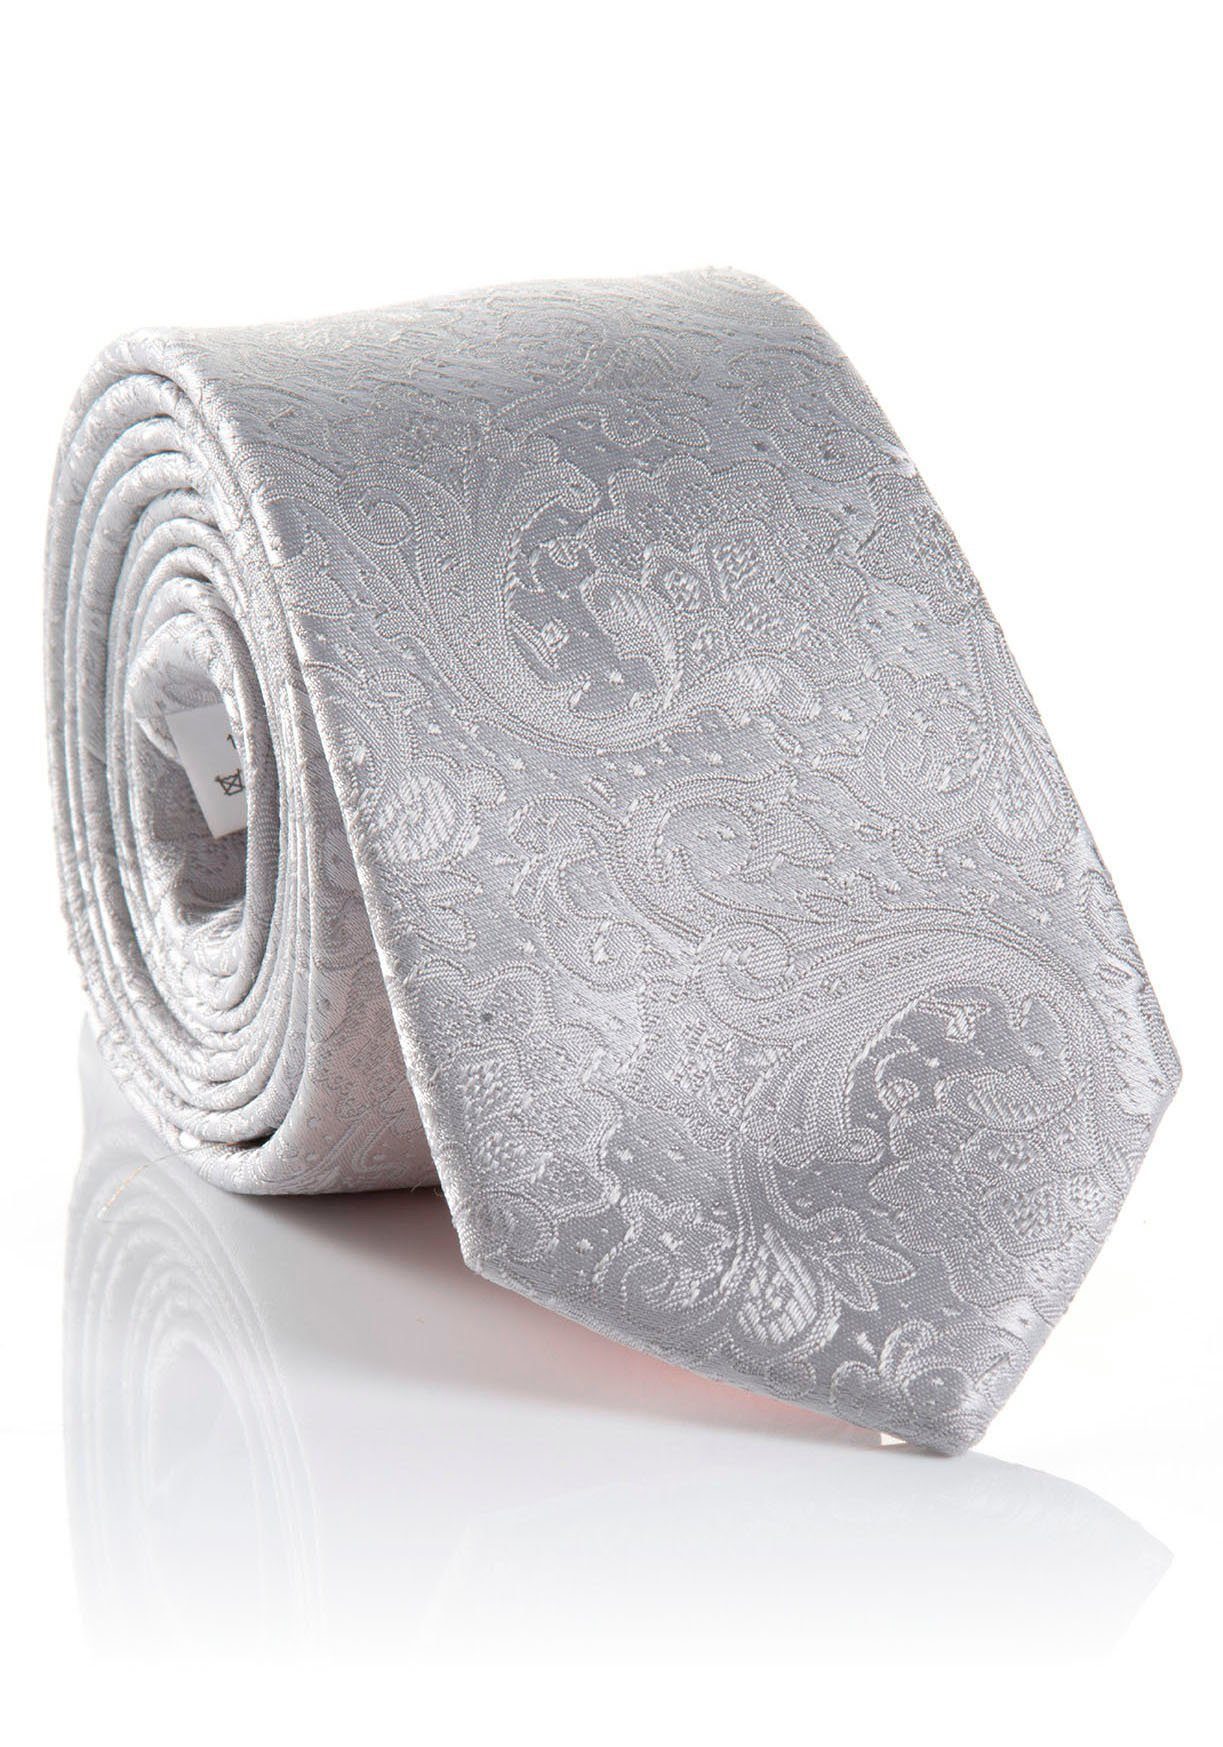 MONTI Krawatte LELIO silver reiner Paisley-Muster Seide, aus Krawatte